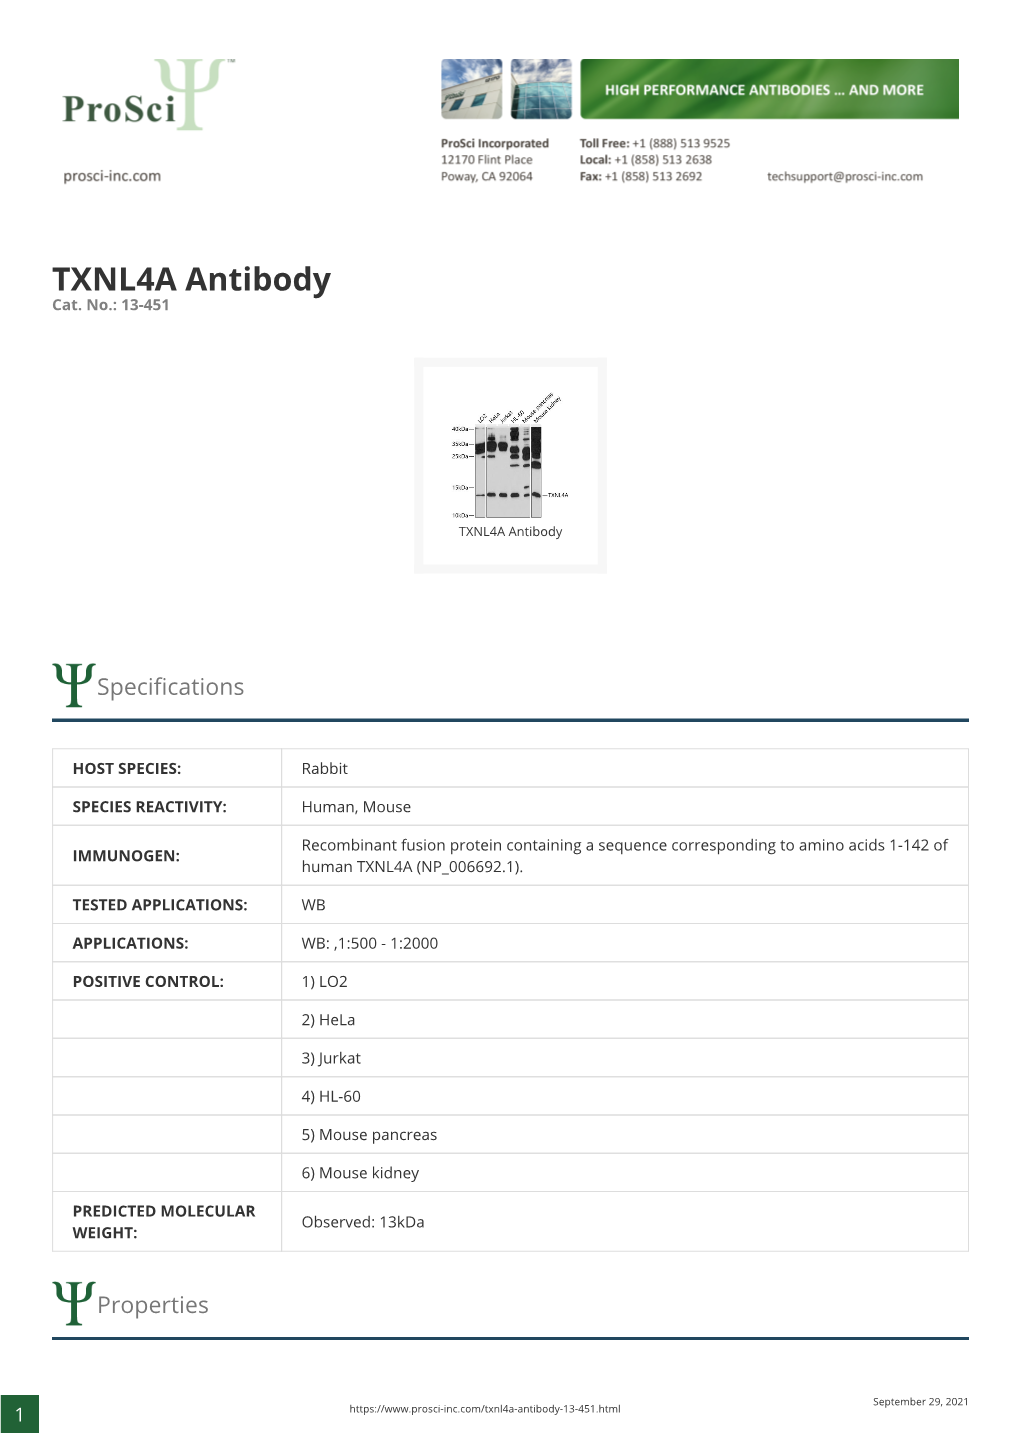 TXNL4A Antibody Cat